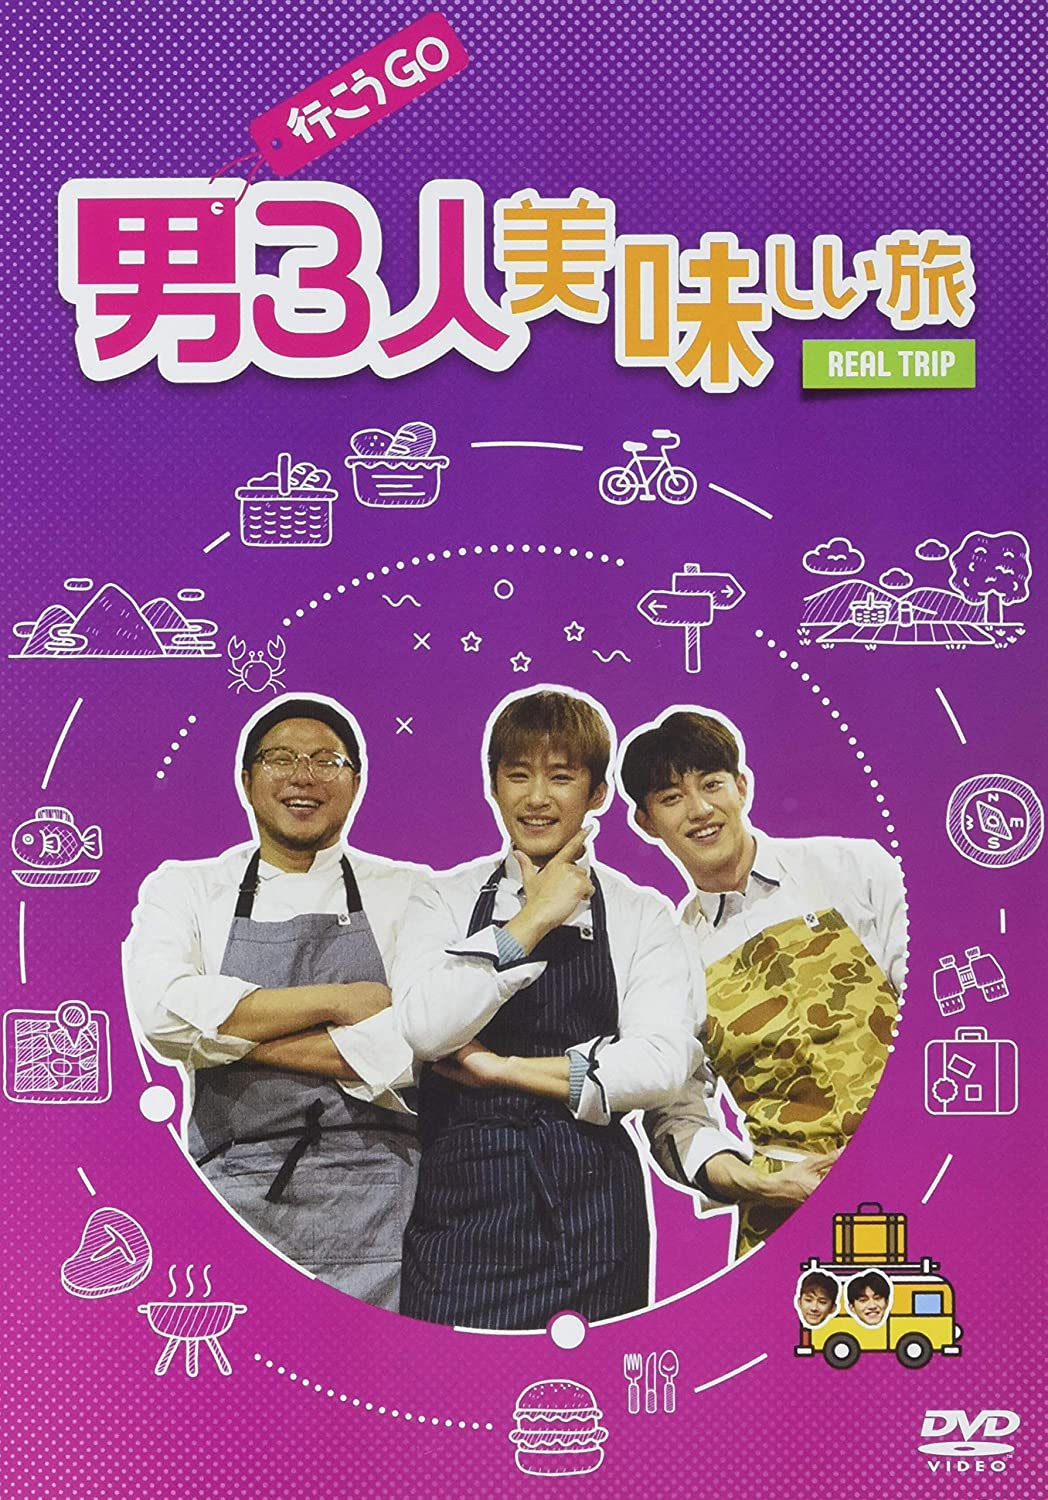 REAL TRIP「男3人美味しい旅~行こうGO!~」 [DVD]